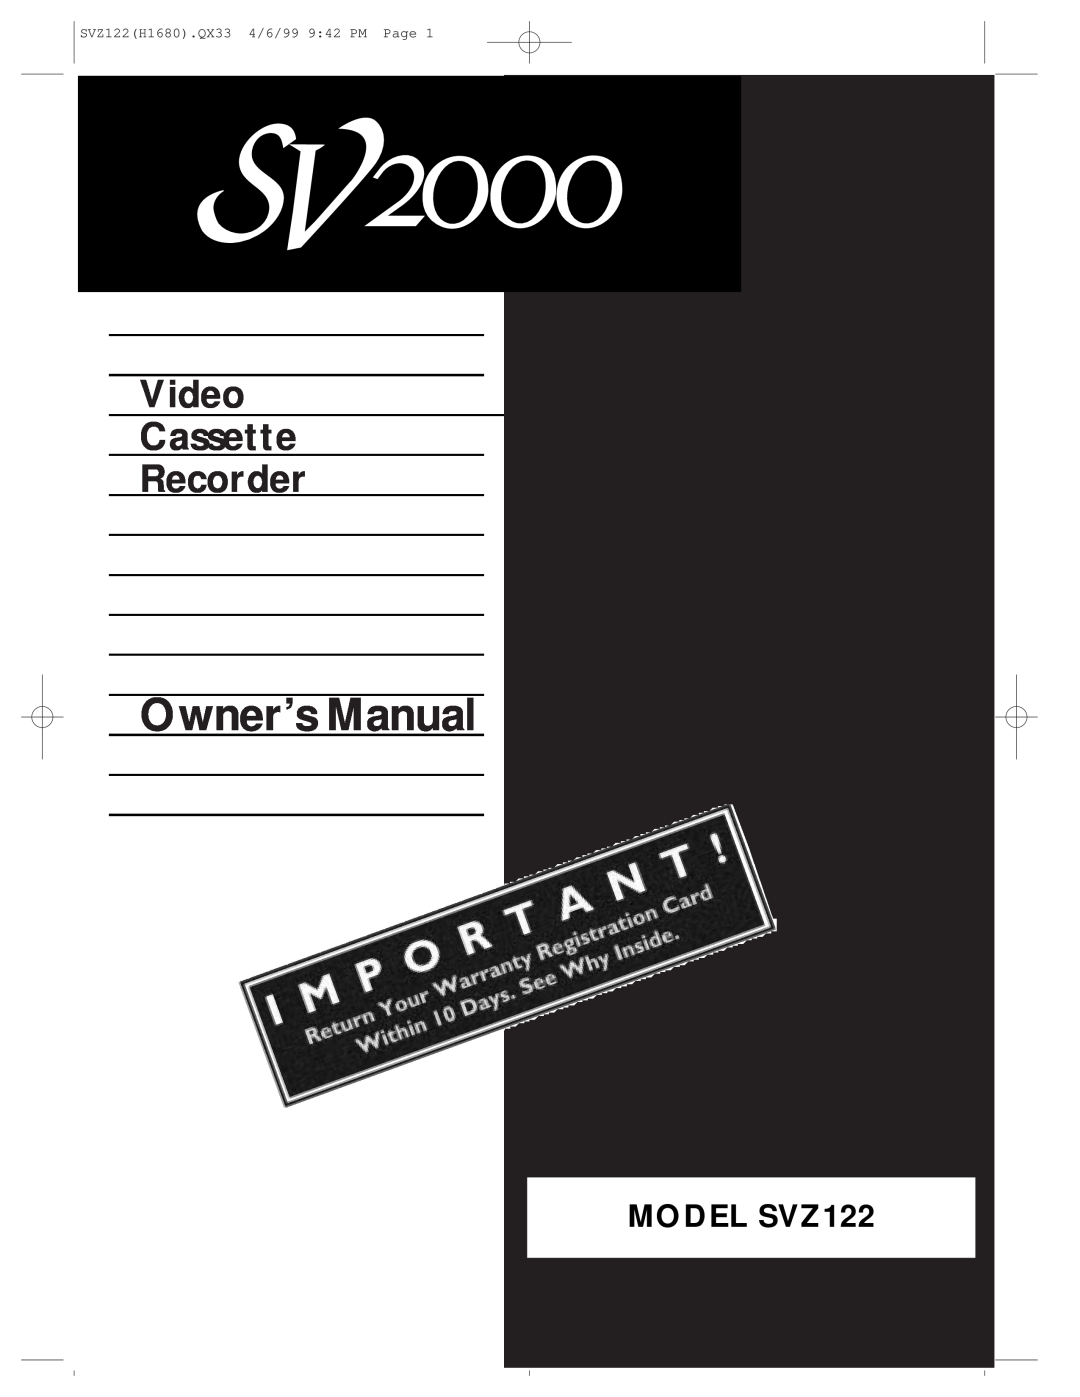 Philips owner manual Owner’s Manual, Video Cassette Recorder, MODEL SVZ122, SVZ122H1680.QX33 4/6/99 942 PM Page 